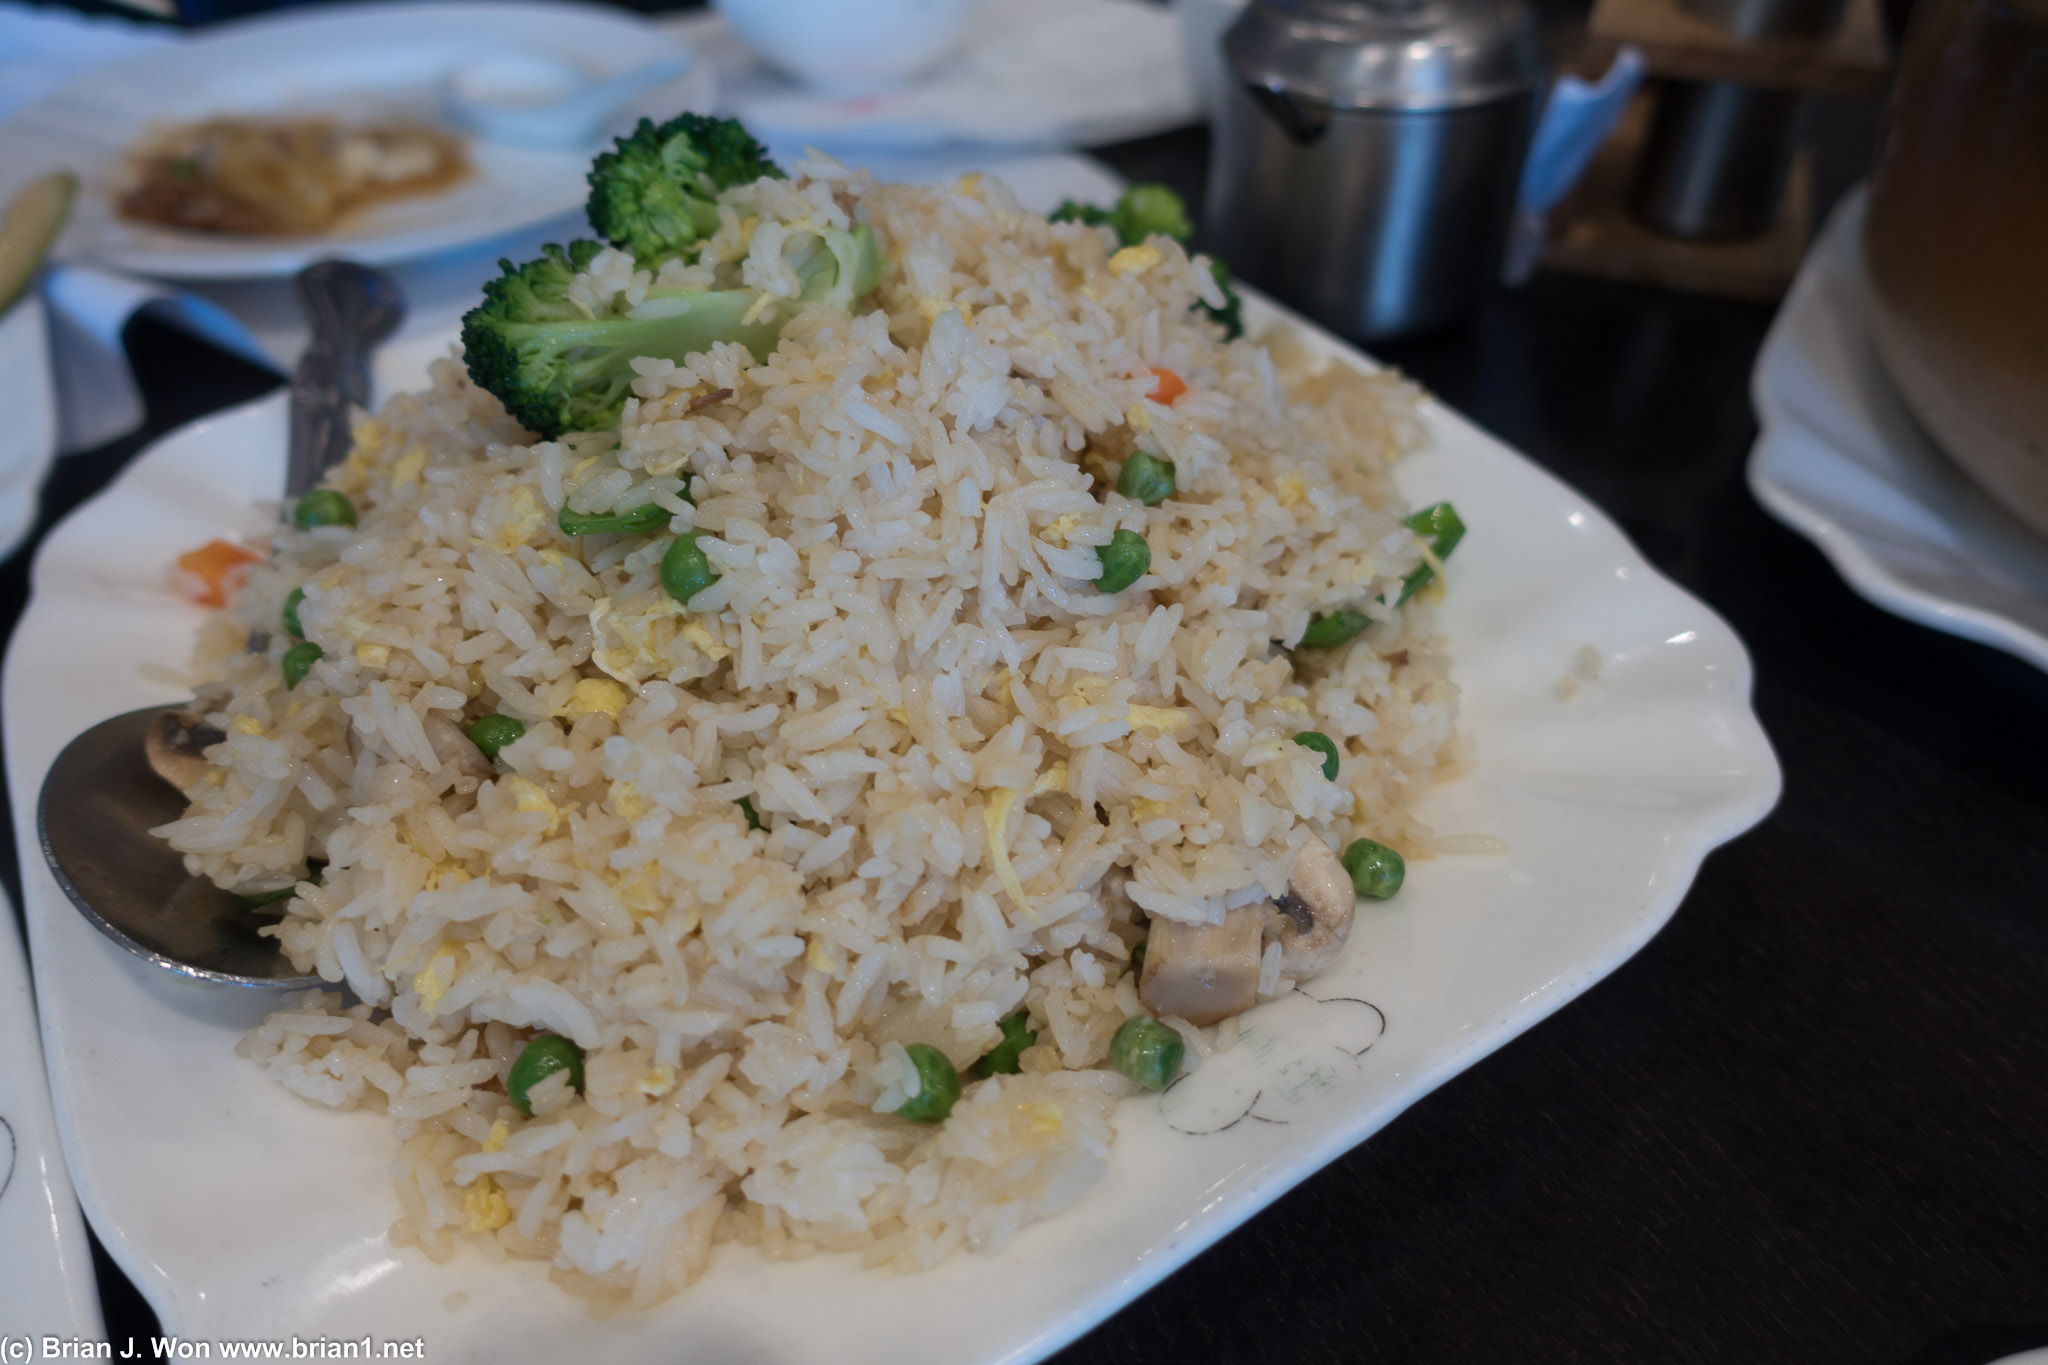 Veggie fried rice. Excellent compliment.